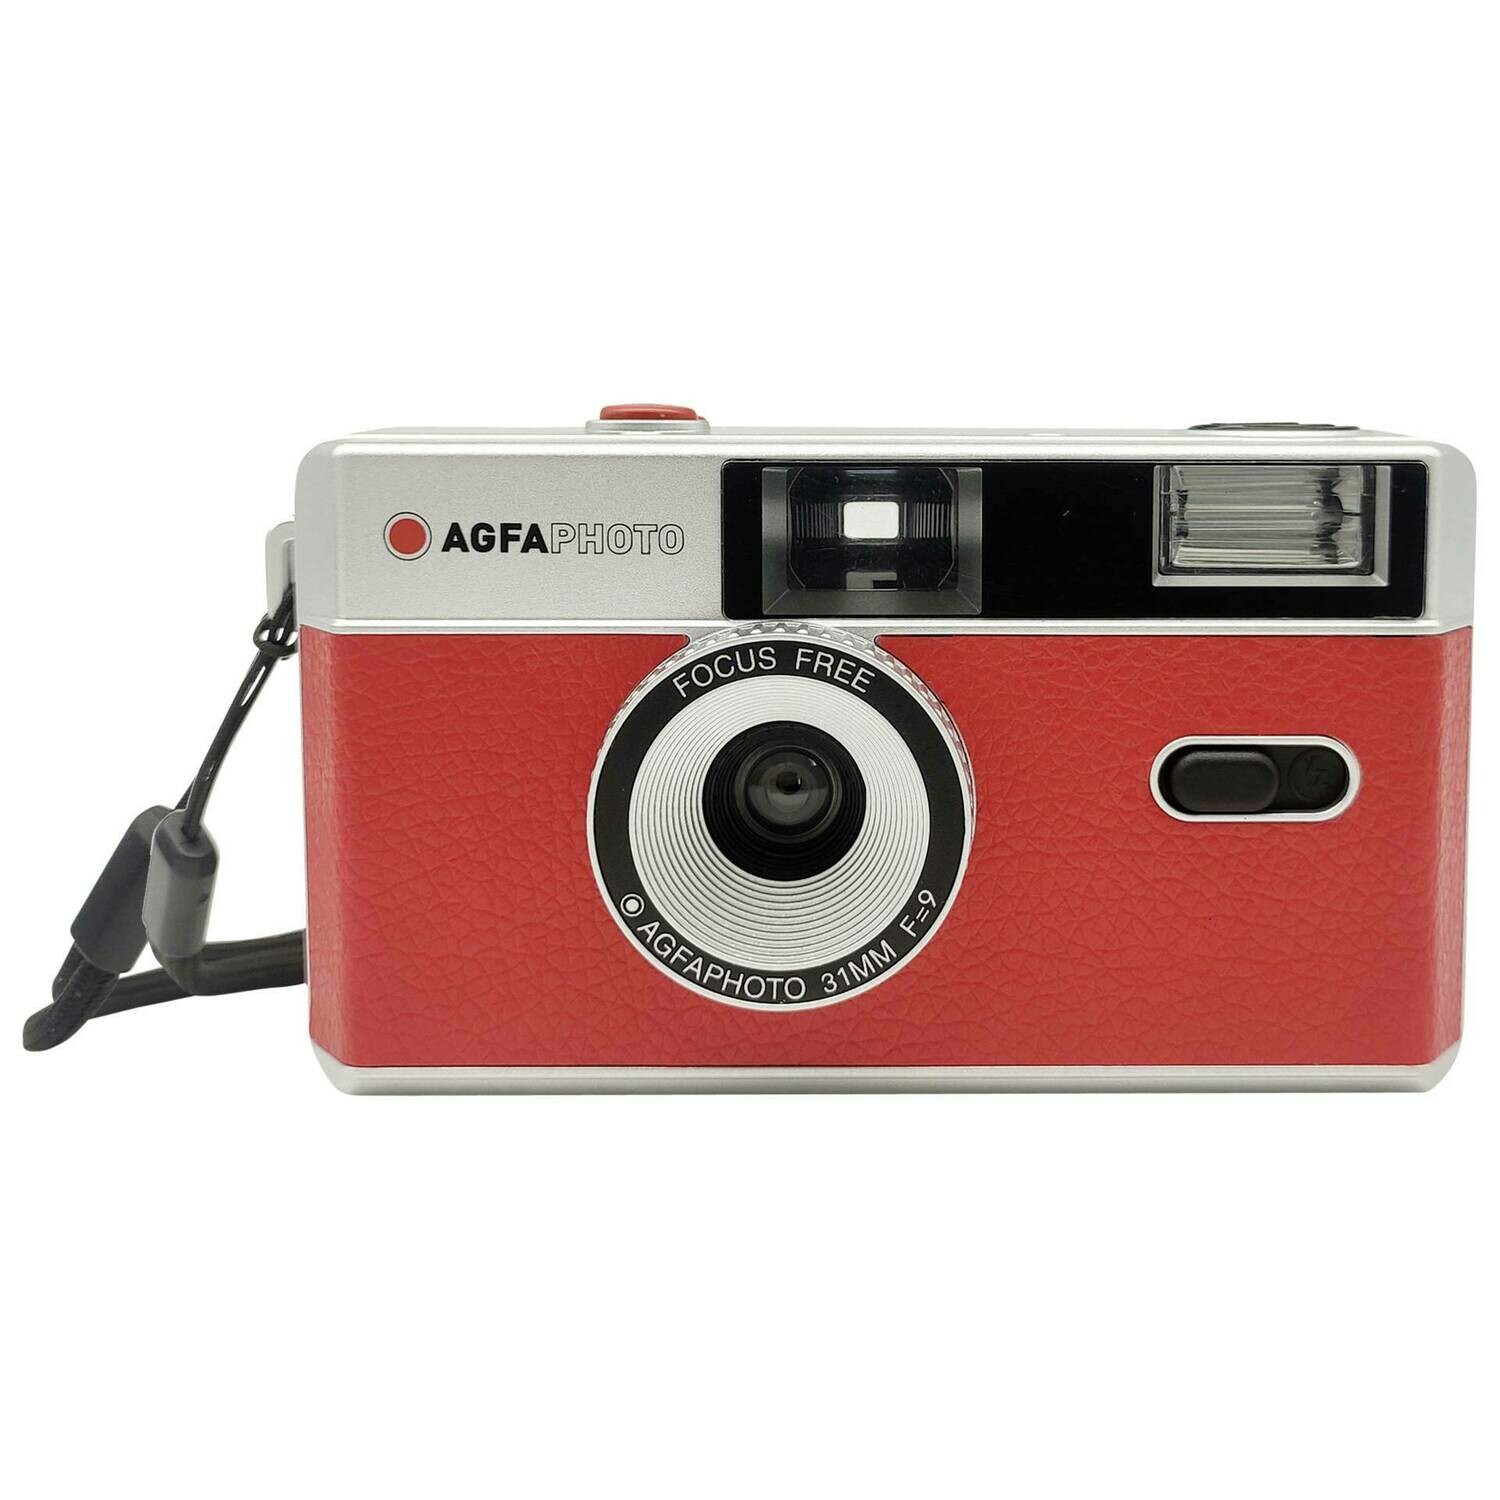 AGFAPHOTO reusable Camera (analog) 35mm rot im zulauf